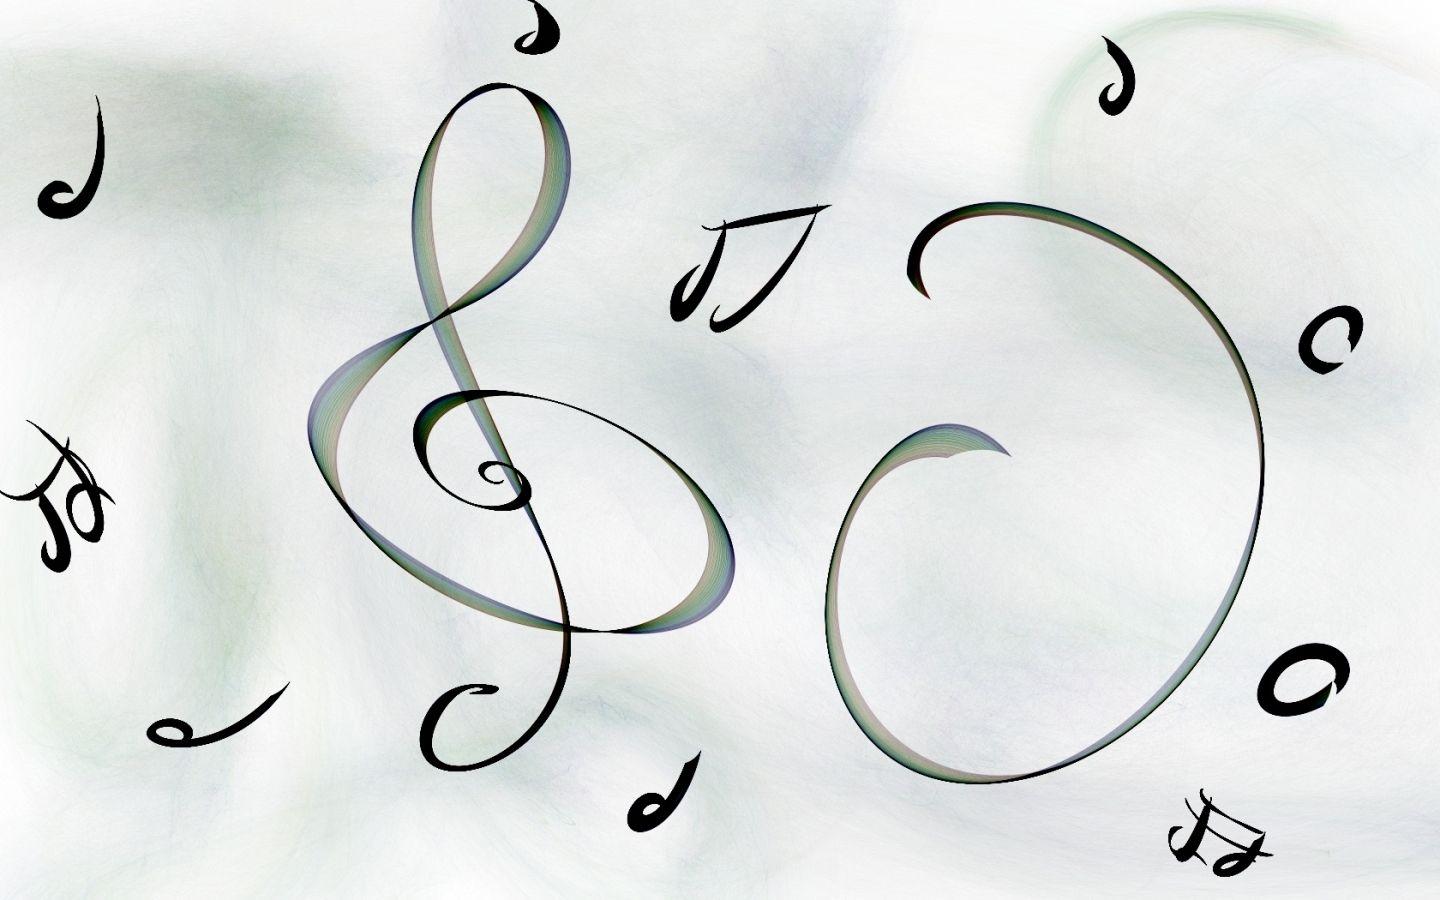 Music symbols Mac Wallpaper Download. Free Mac Wallpaper Download